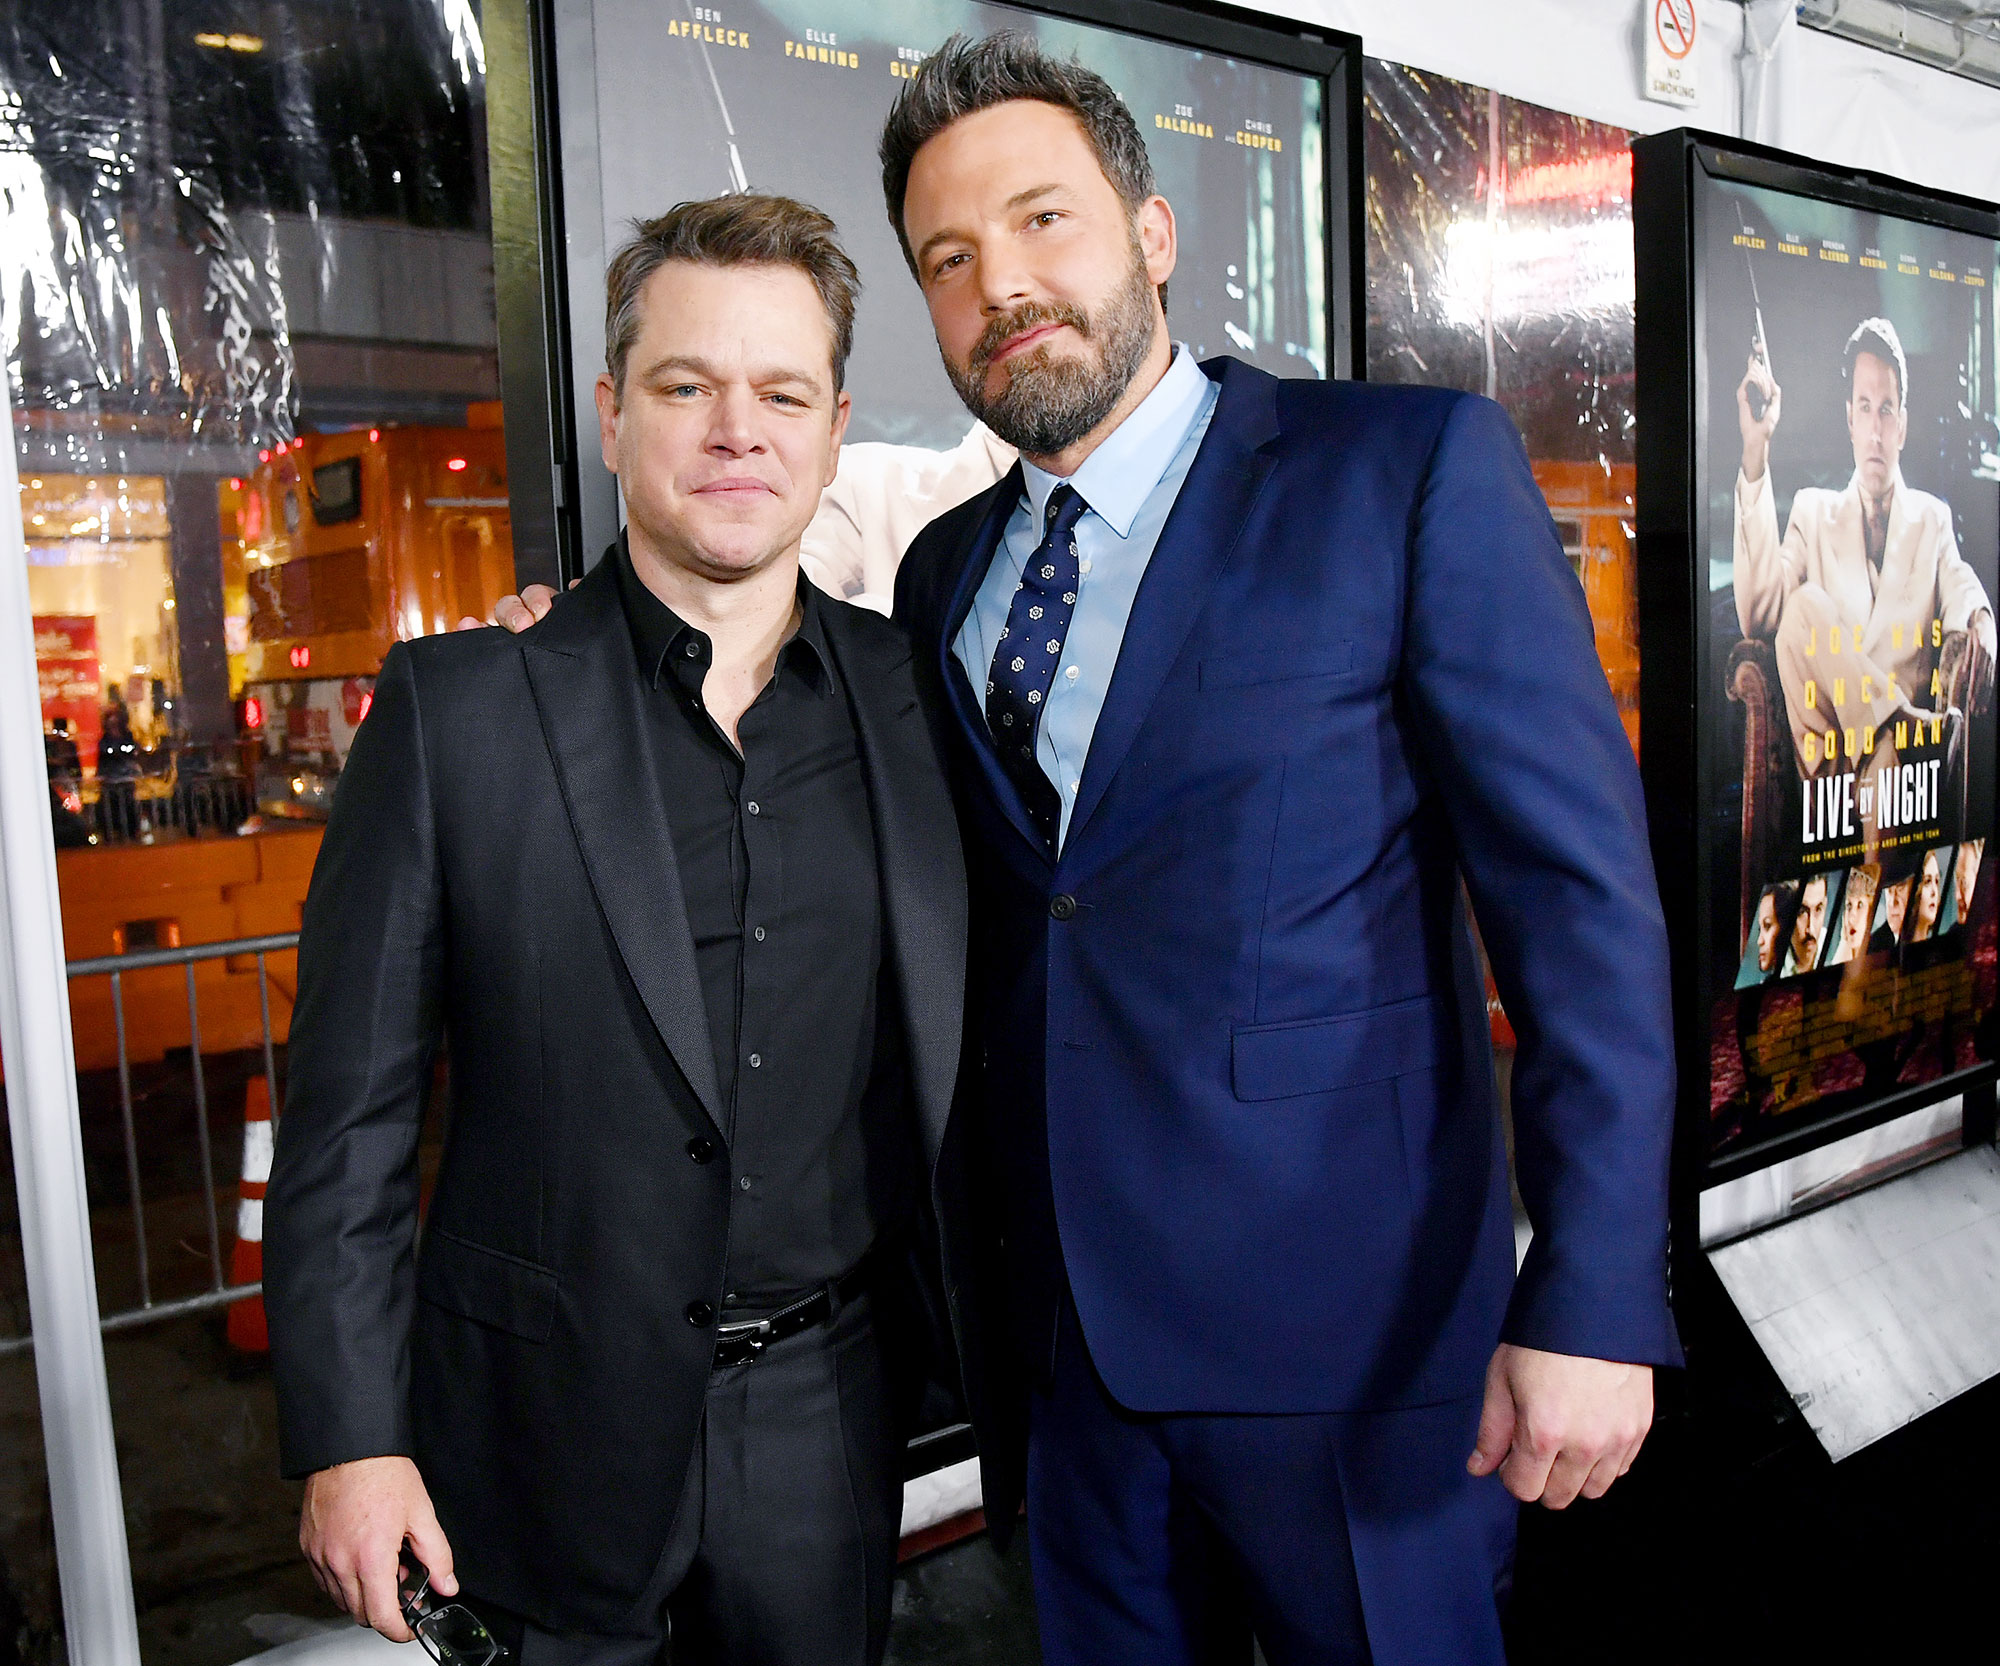 Ben Affleck vs Matt Damon: Who has a Higher Net Worth and Who is Older?